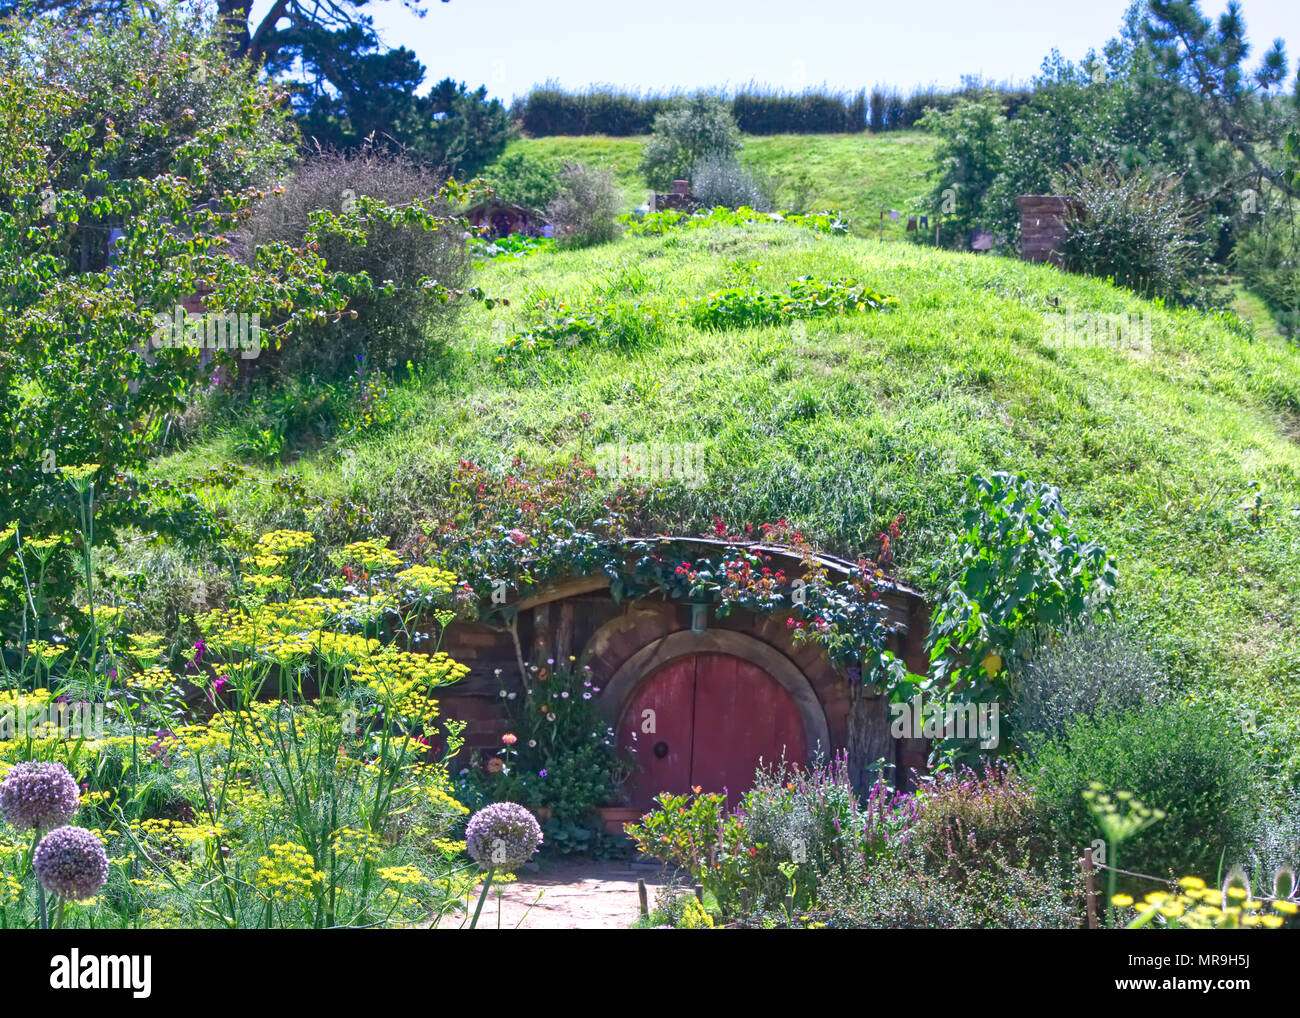 Hobbit hole in Hobbiton, Nz Stock Photo